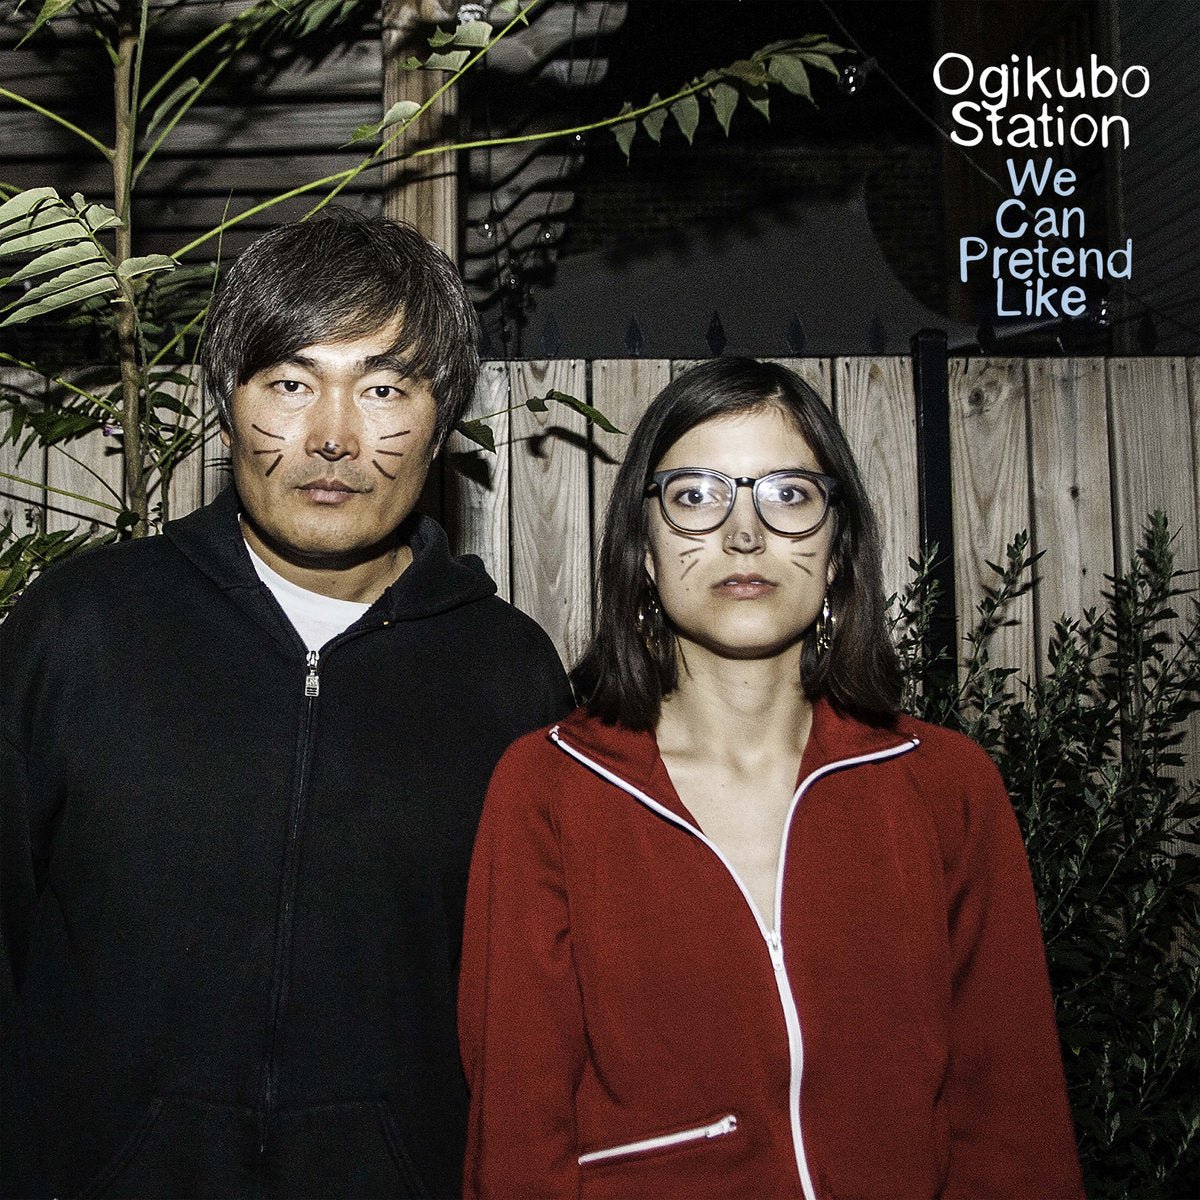 Ogikubo Station - We Can Pretend Like LP - Vinyl - Asian Man